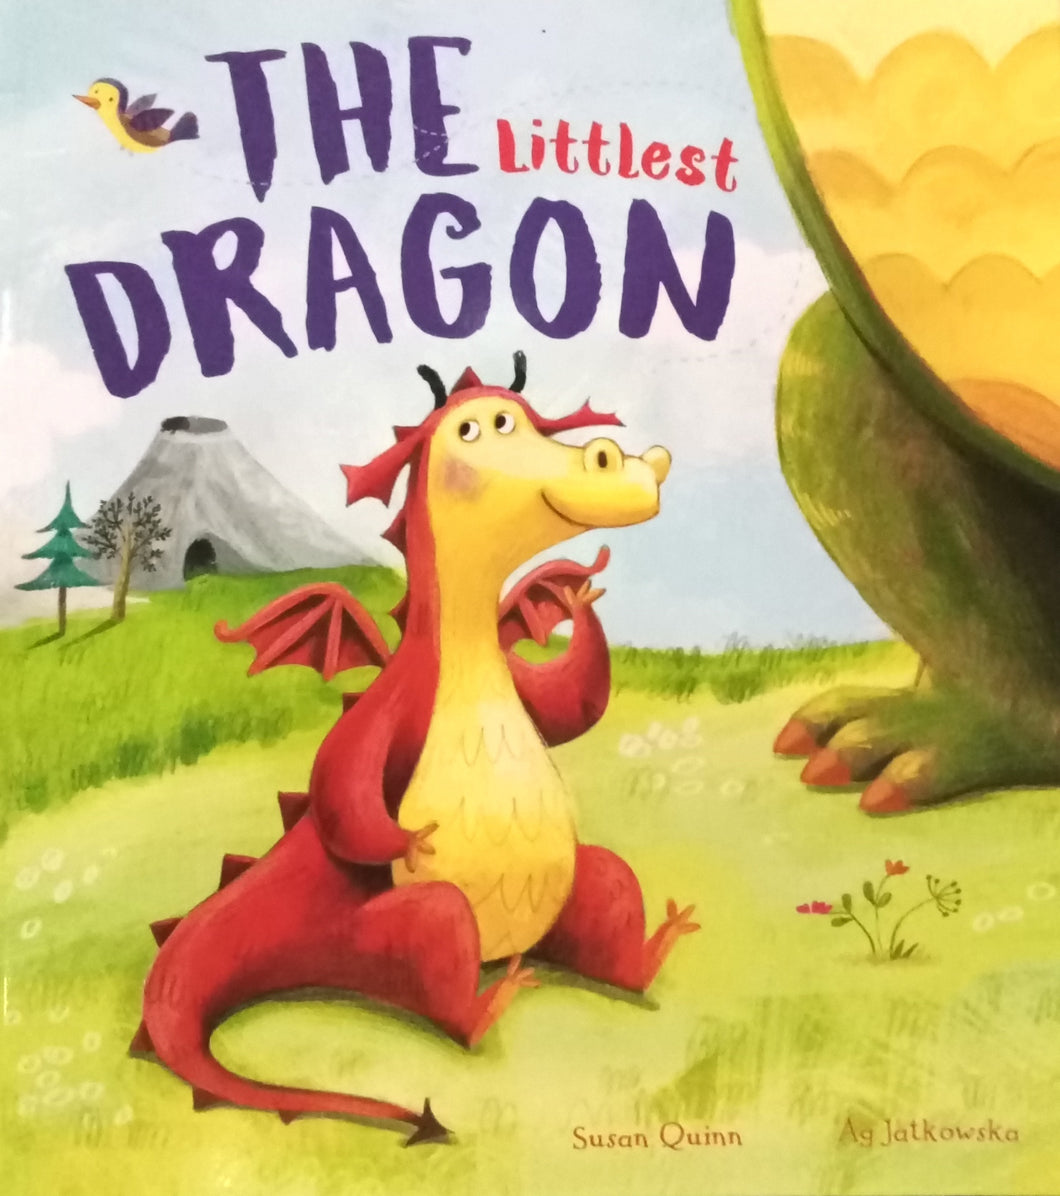 The Littlest Dragon by Susan Quinn